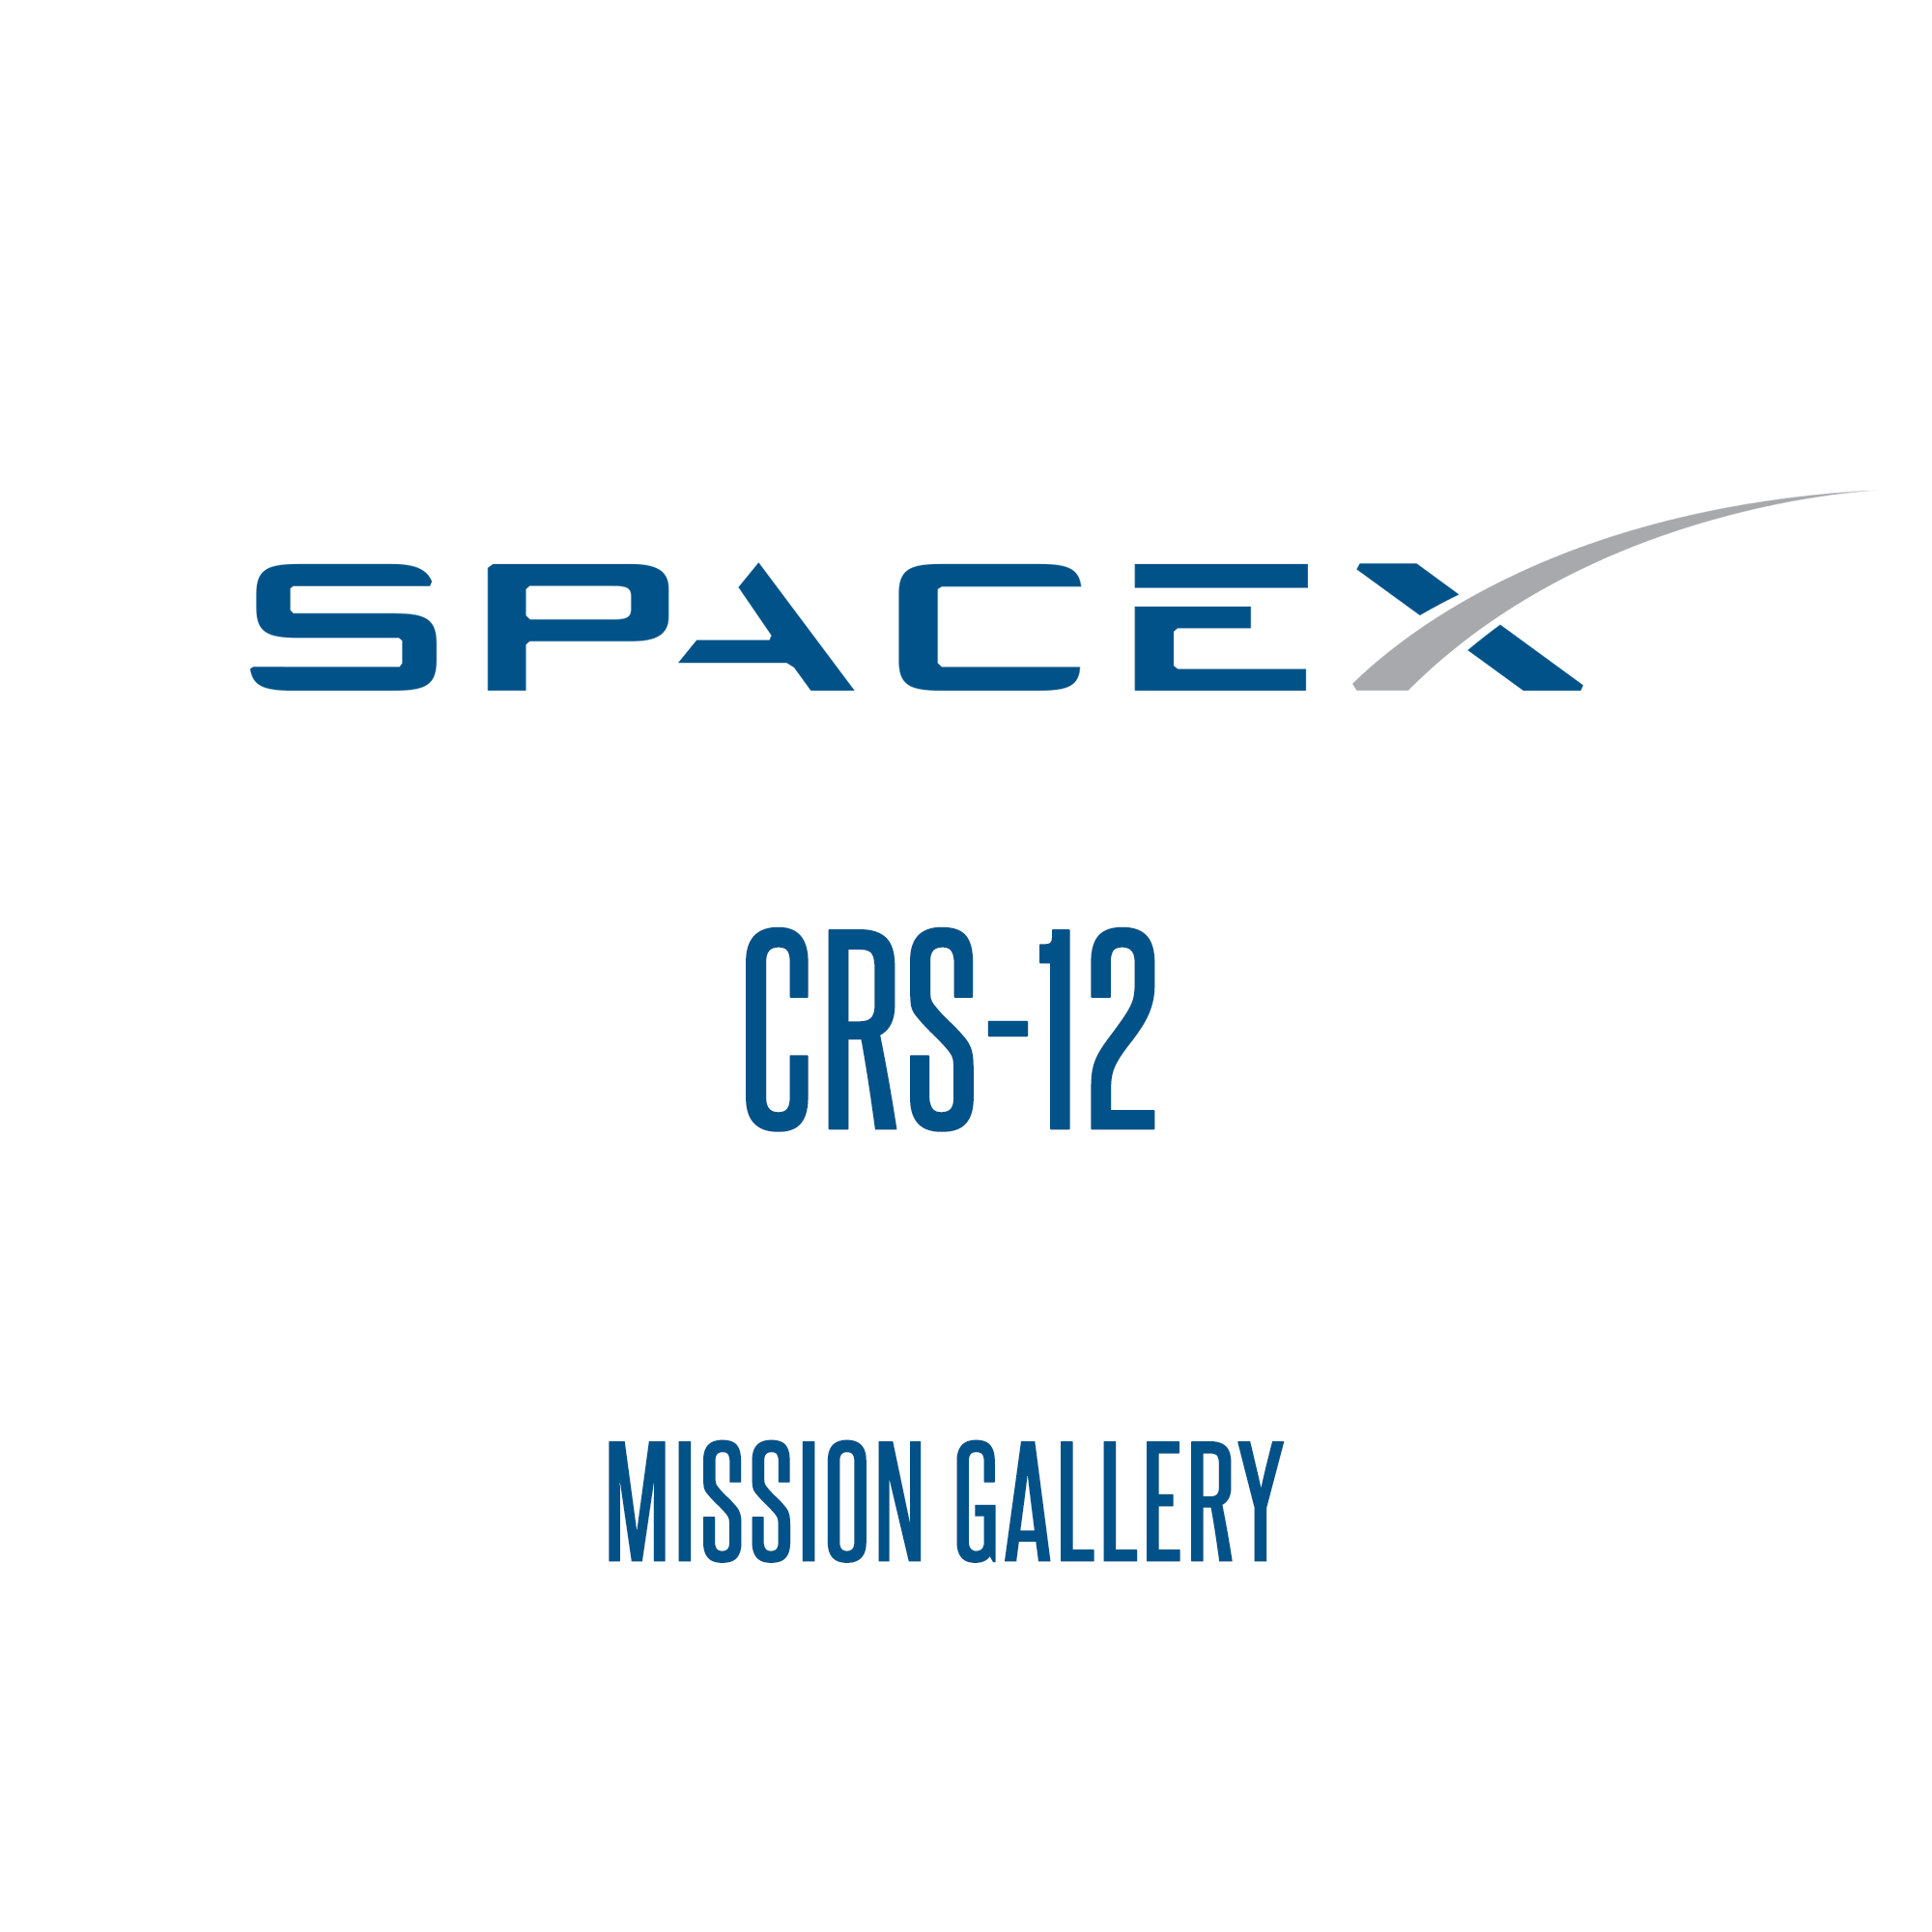 Sapce-X Logo - SpaceX-Logo.svg - Space News 360